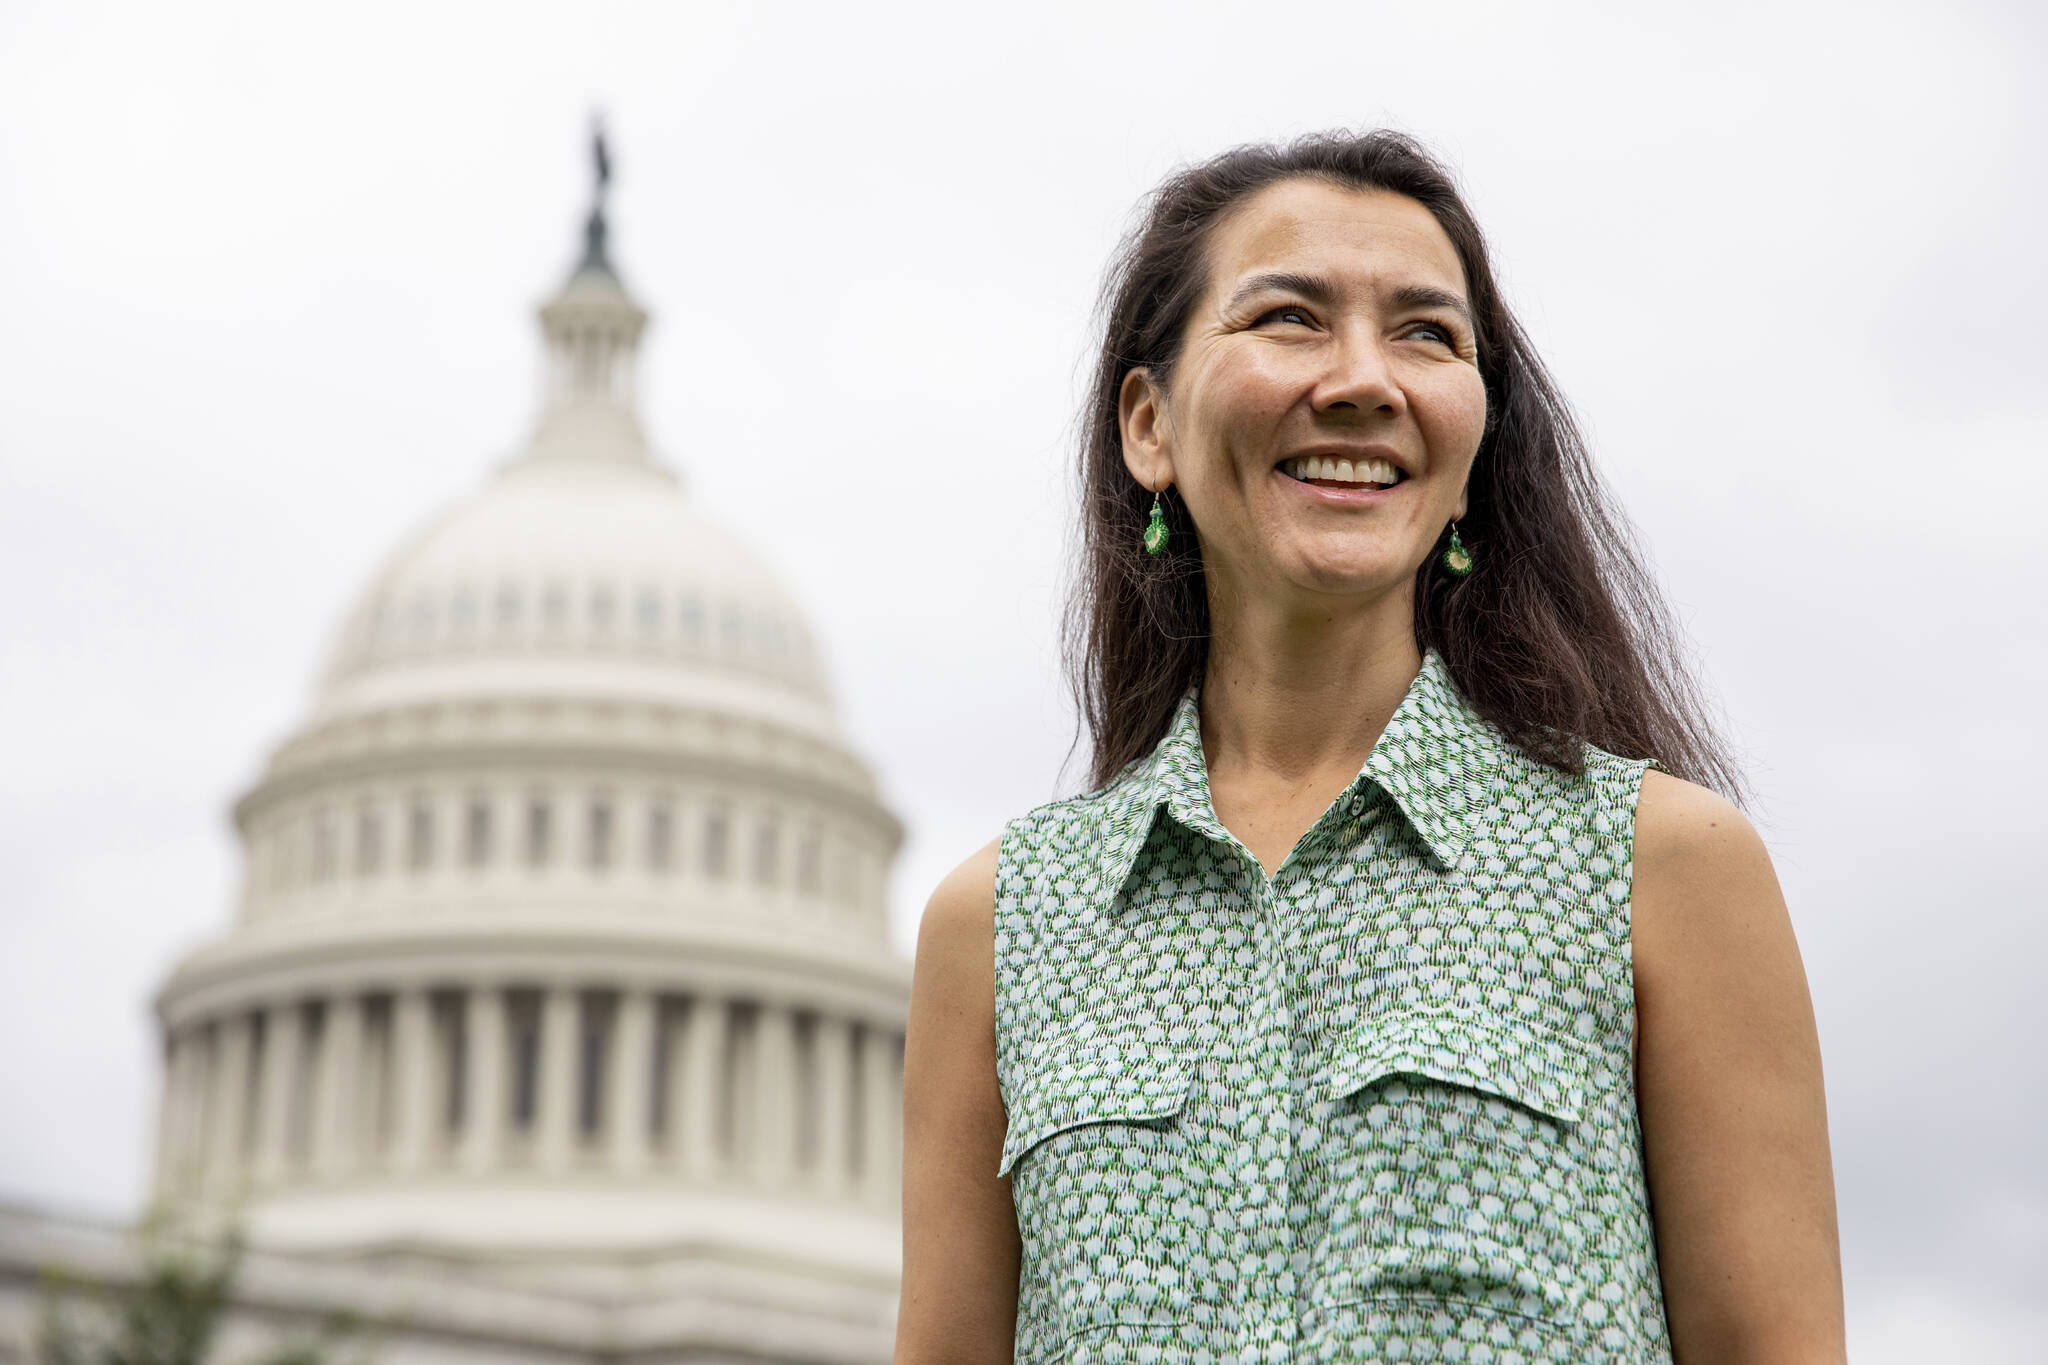 Rep. Mary Peltola, D-Alaska, poses for a portrait at the U.S. Capitol in Washington on Monday, Sept. 12, 2022. (AP Photo / Amanda Andrade-Rhoades)